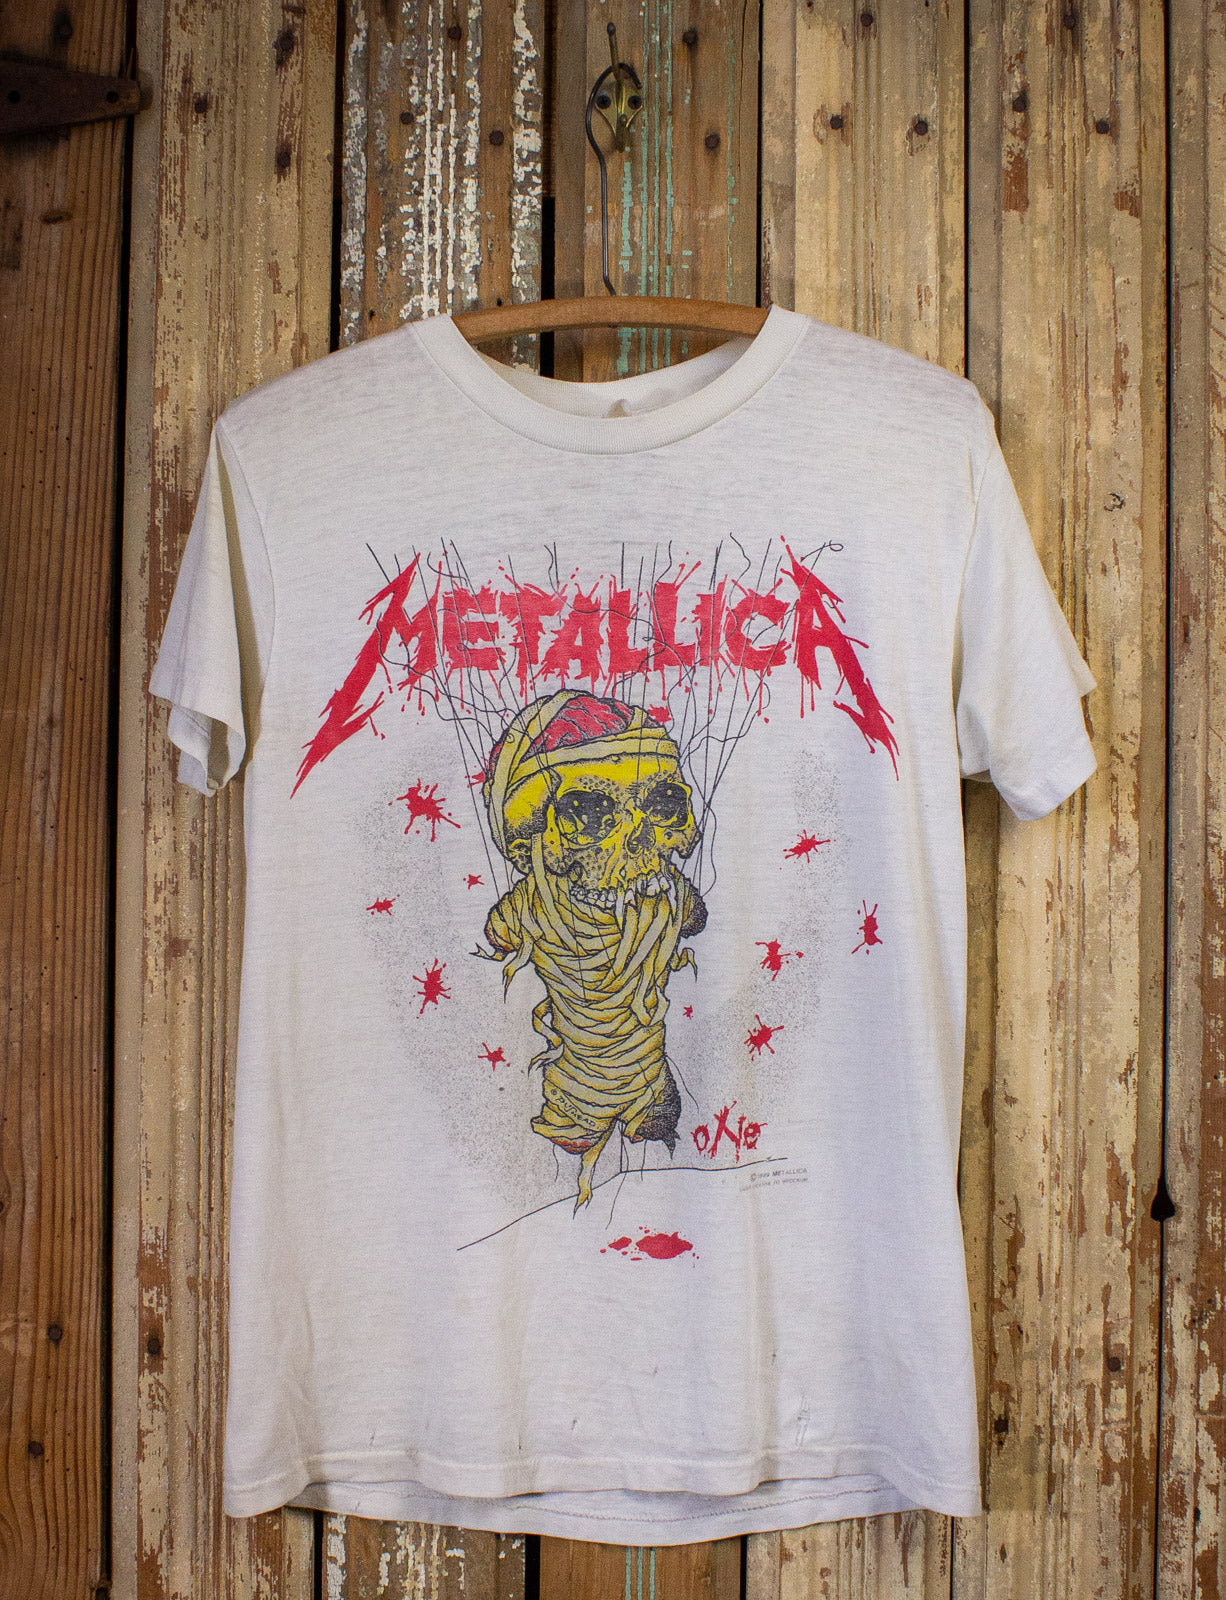 Vintage Metallica One Landmine Concert T Shirt 1989 White Medium